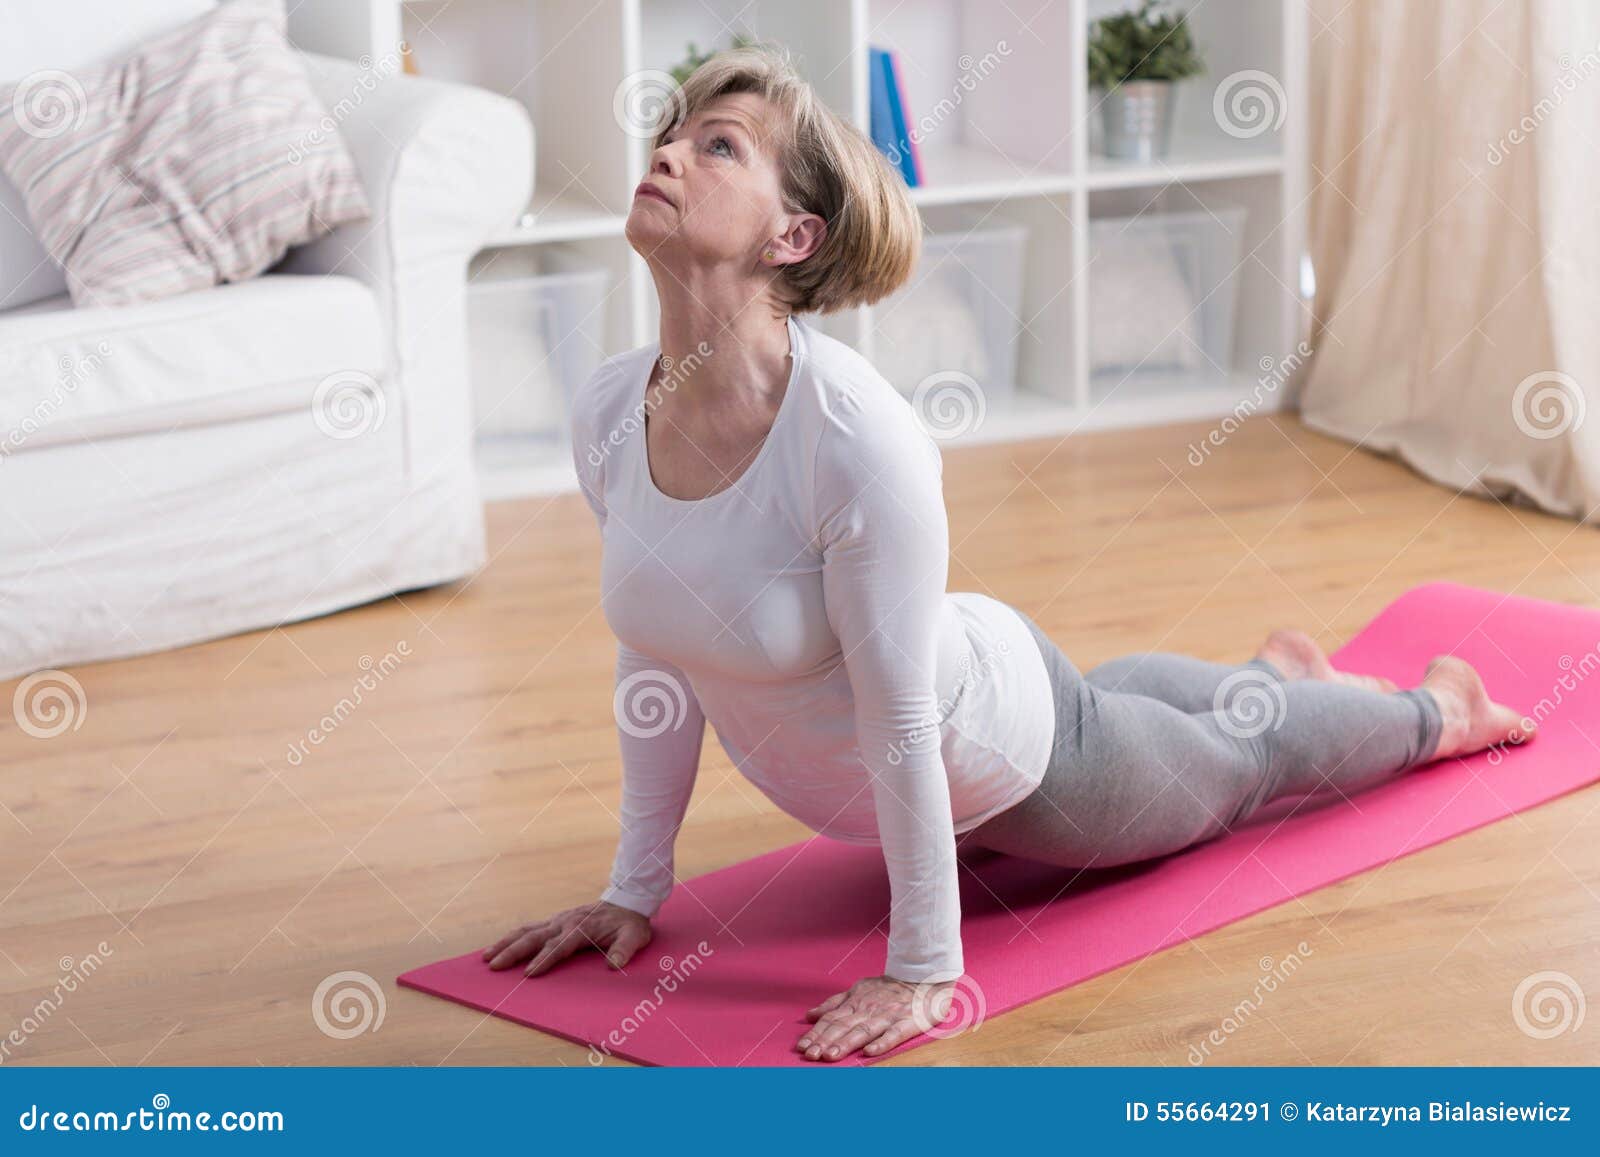 older woman and yoga